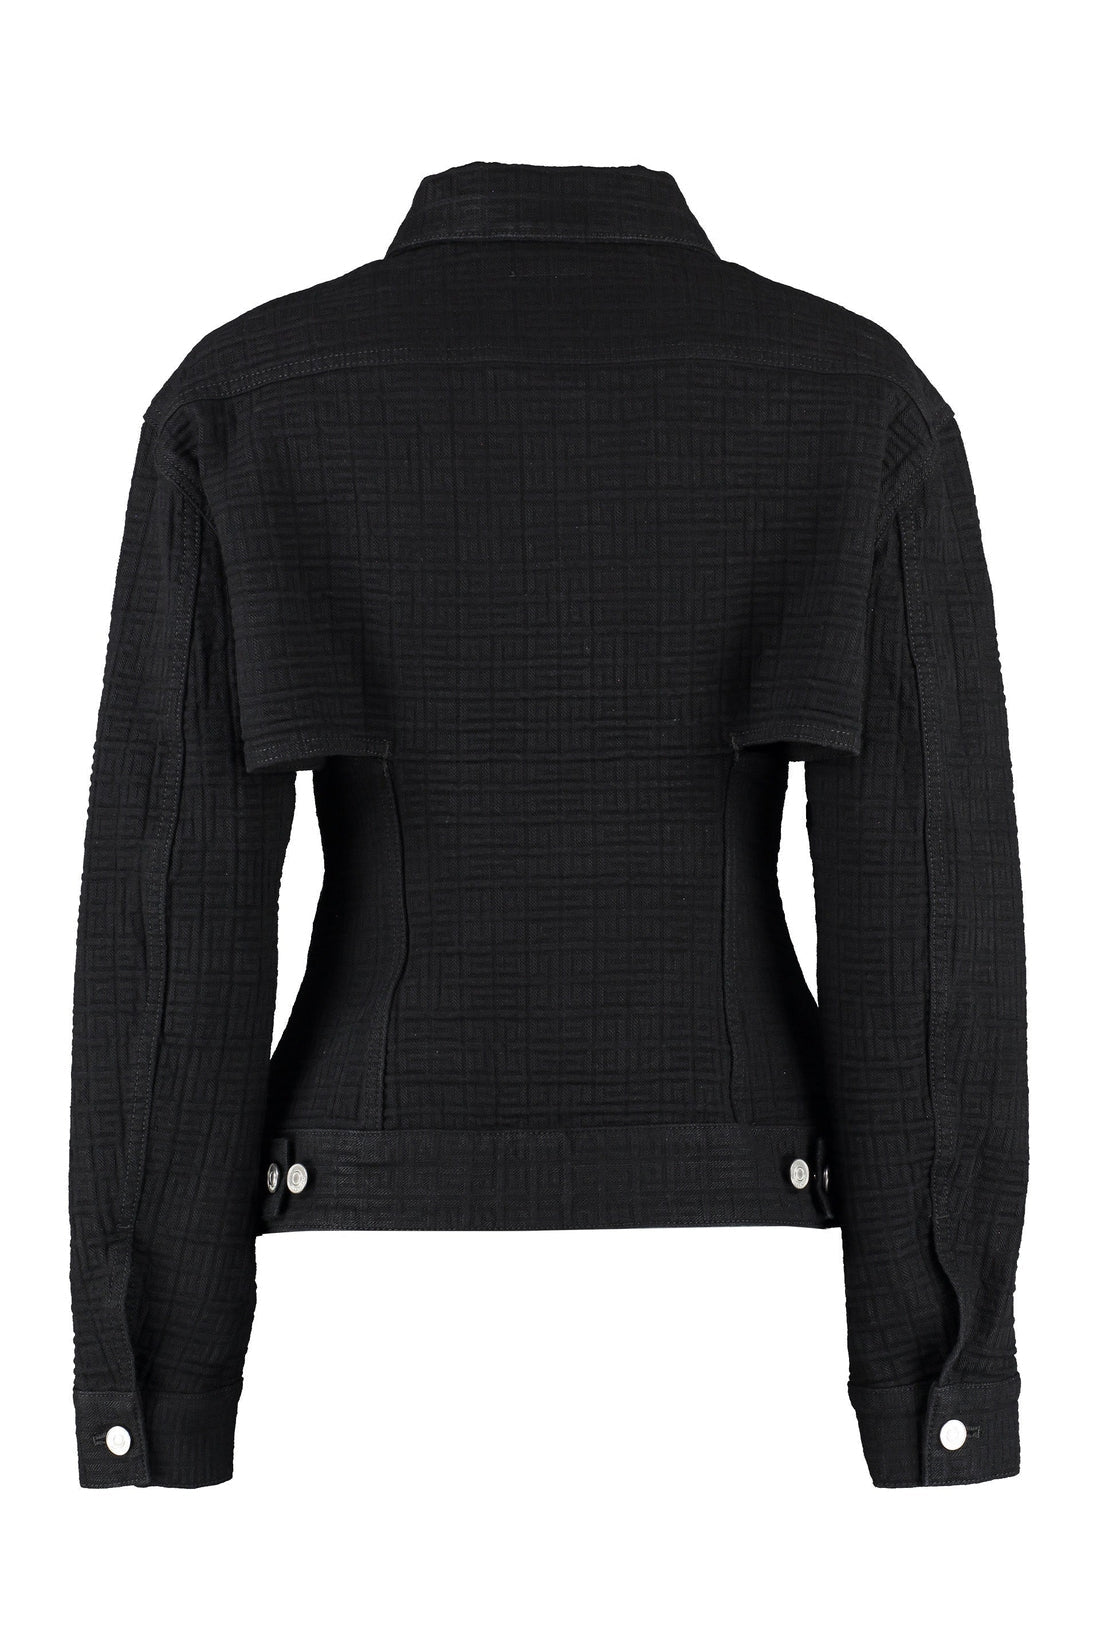 Givenchy-OUTLET-SALE-Denim jacket-ARCHIVIST